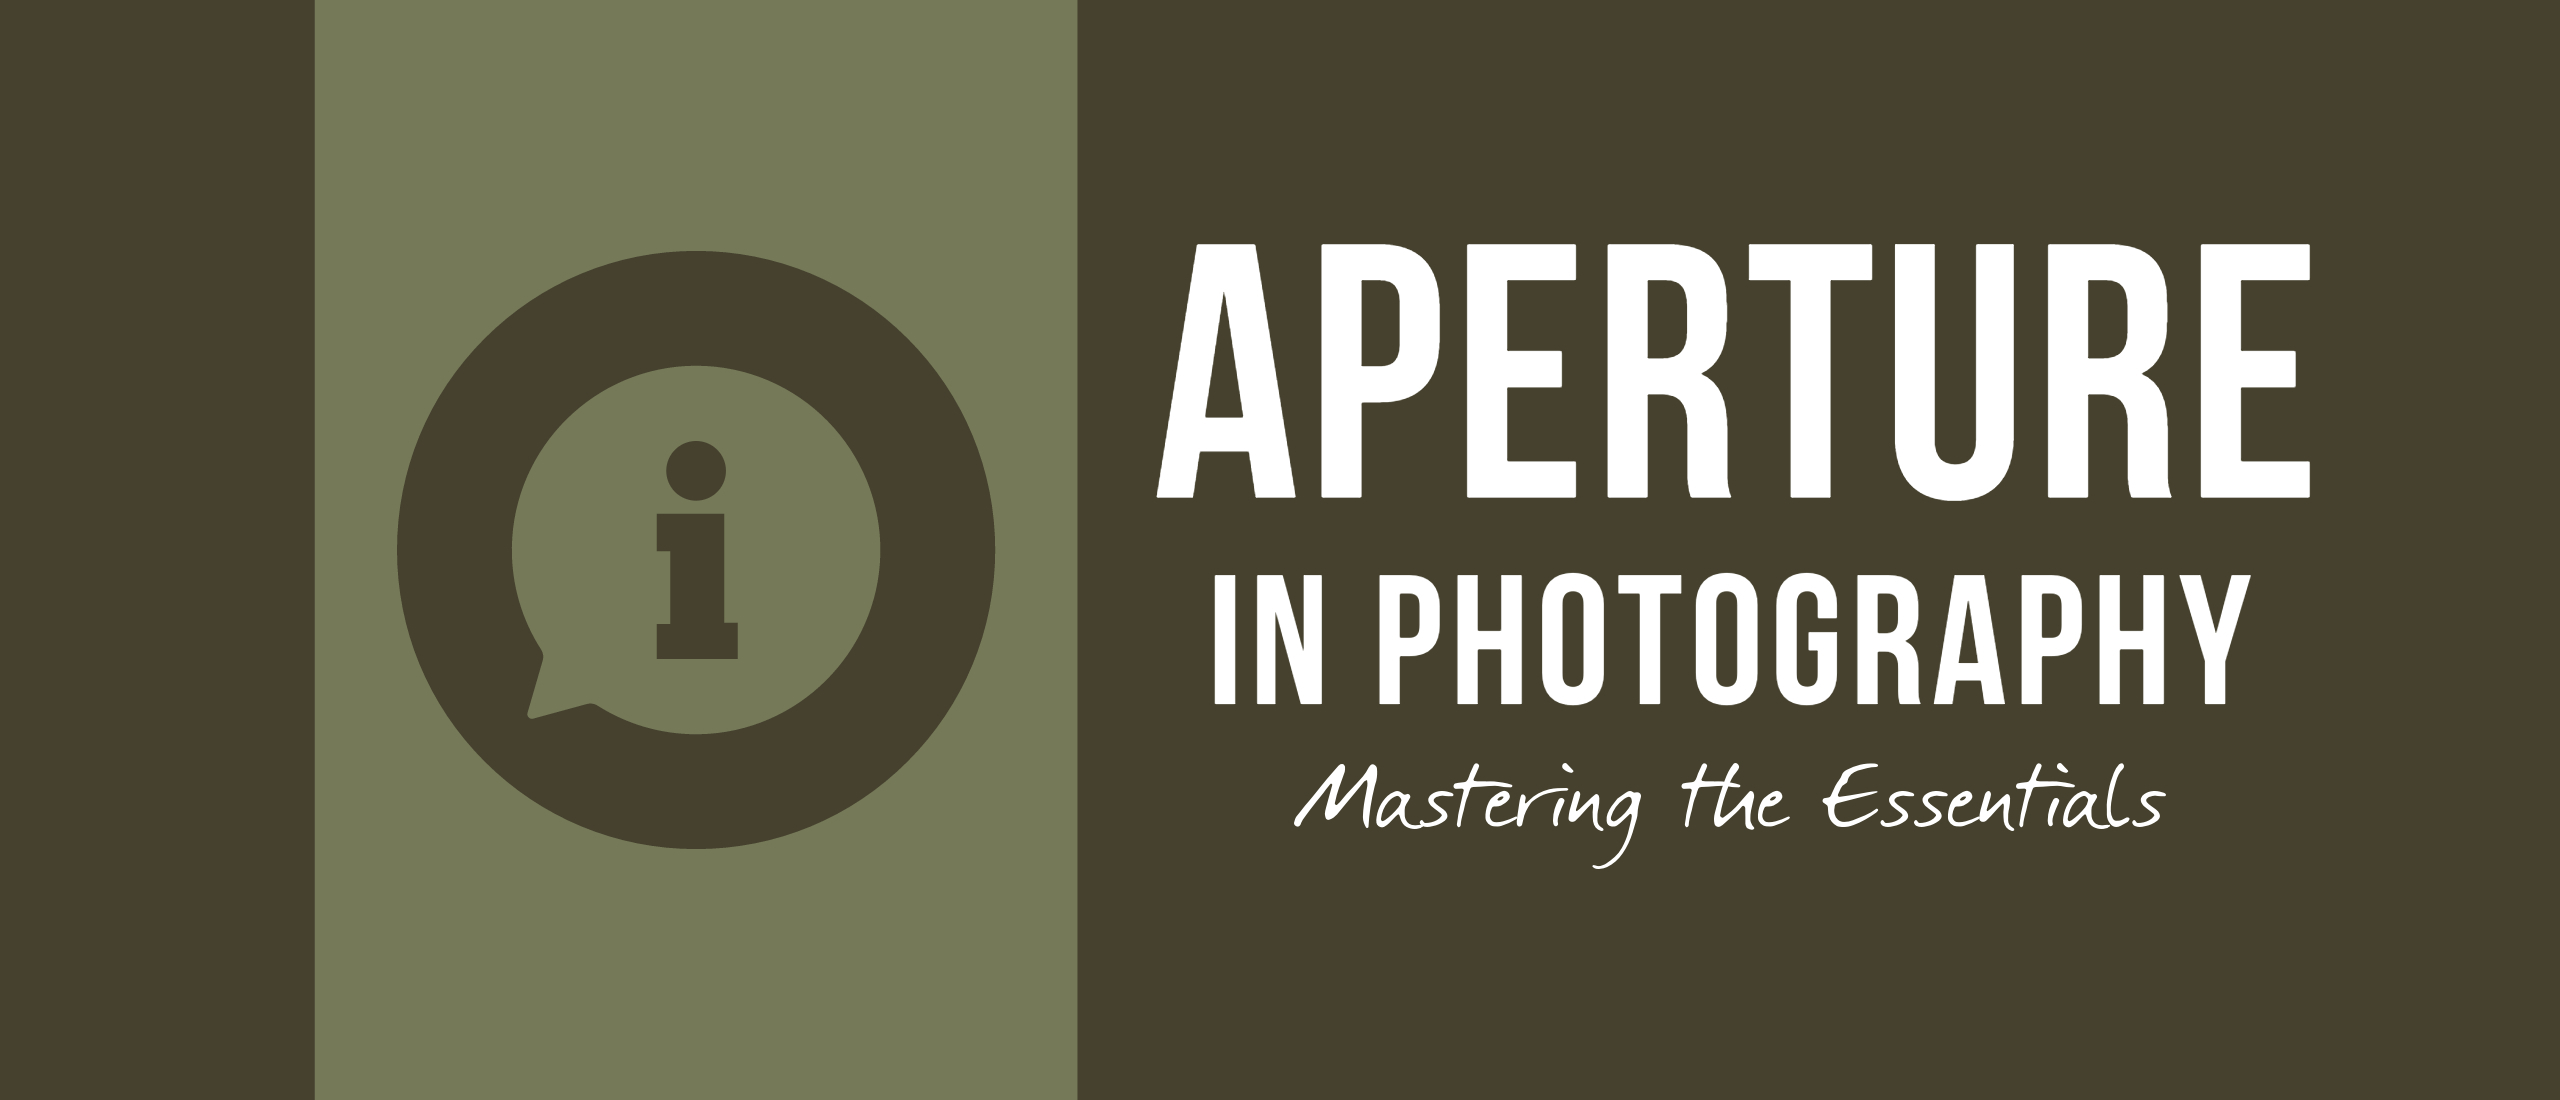 Understanding Aperture in Photography: Mastering the Essentials